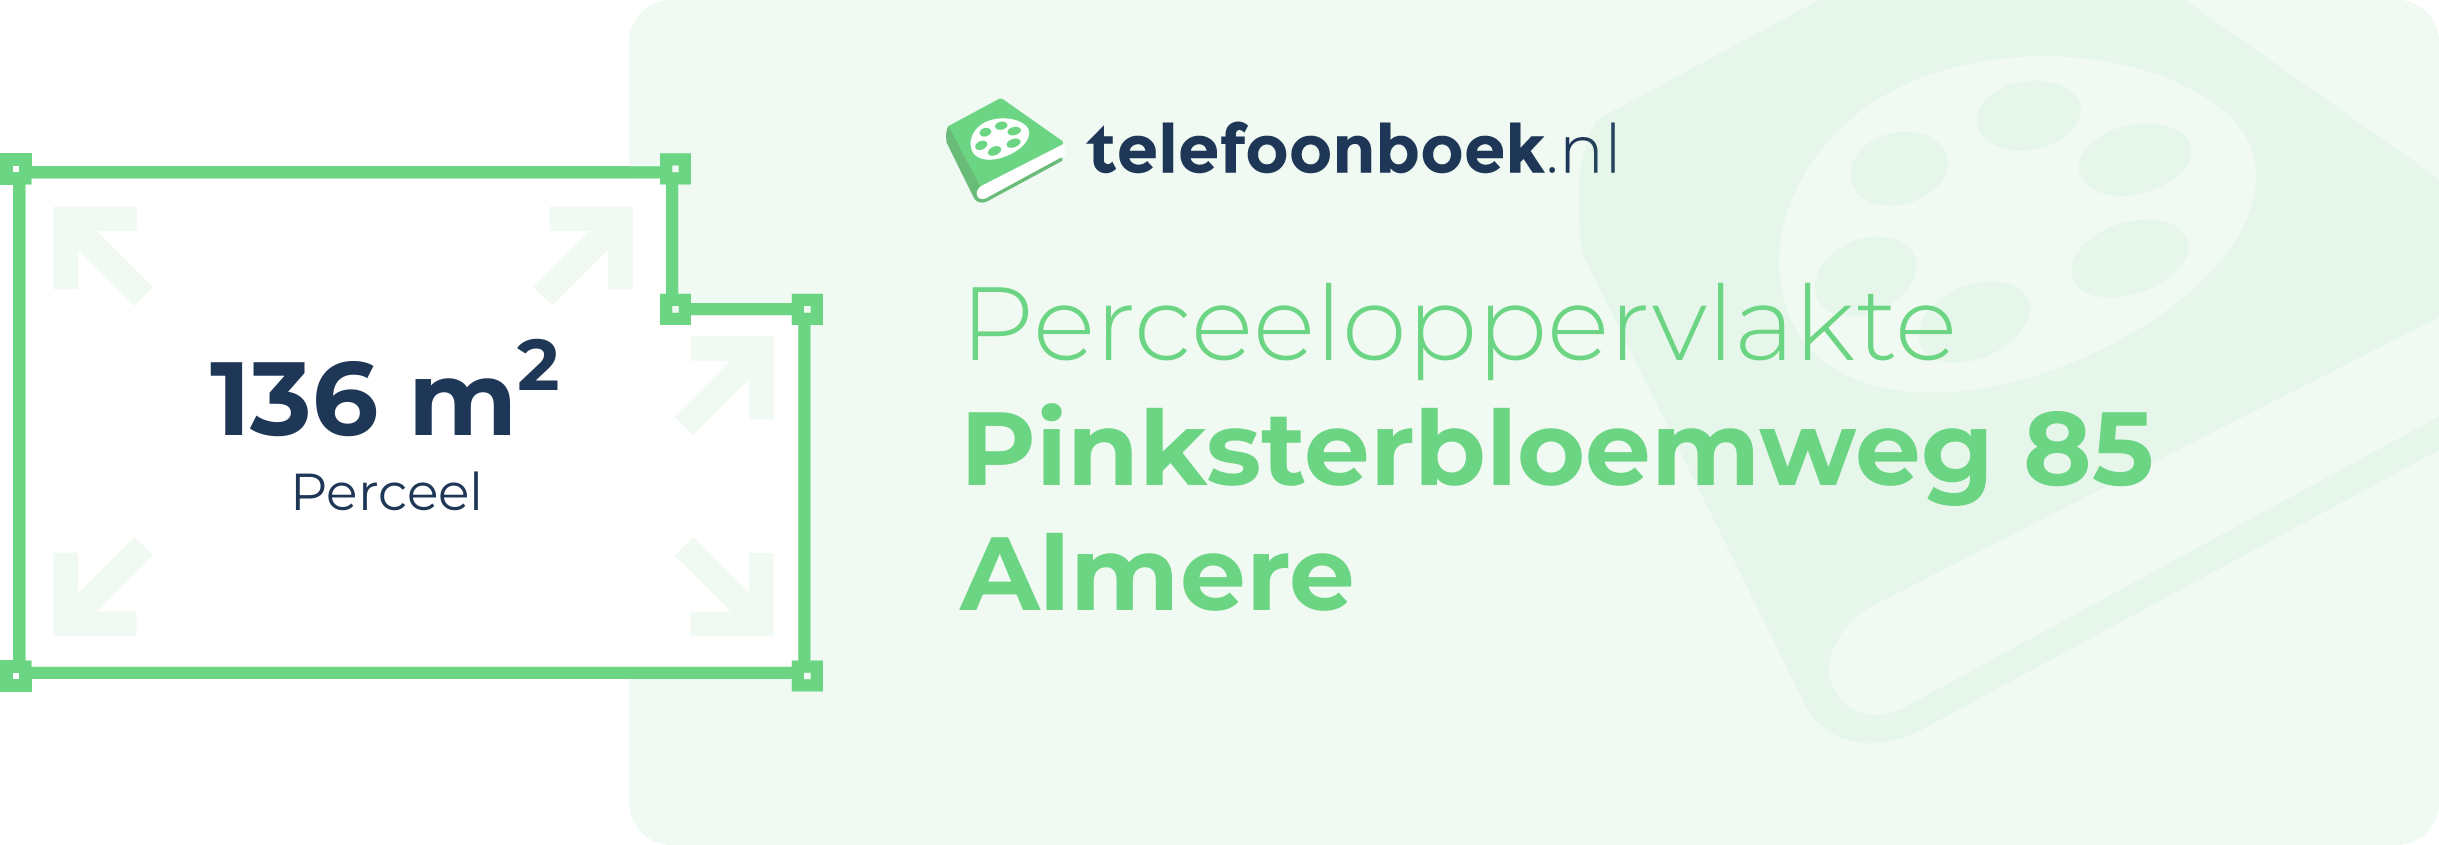 Perceeloppervlakte Pinksterbloemweg 85 Almere